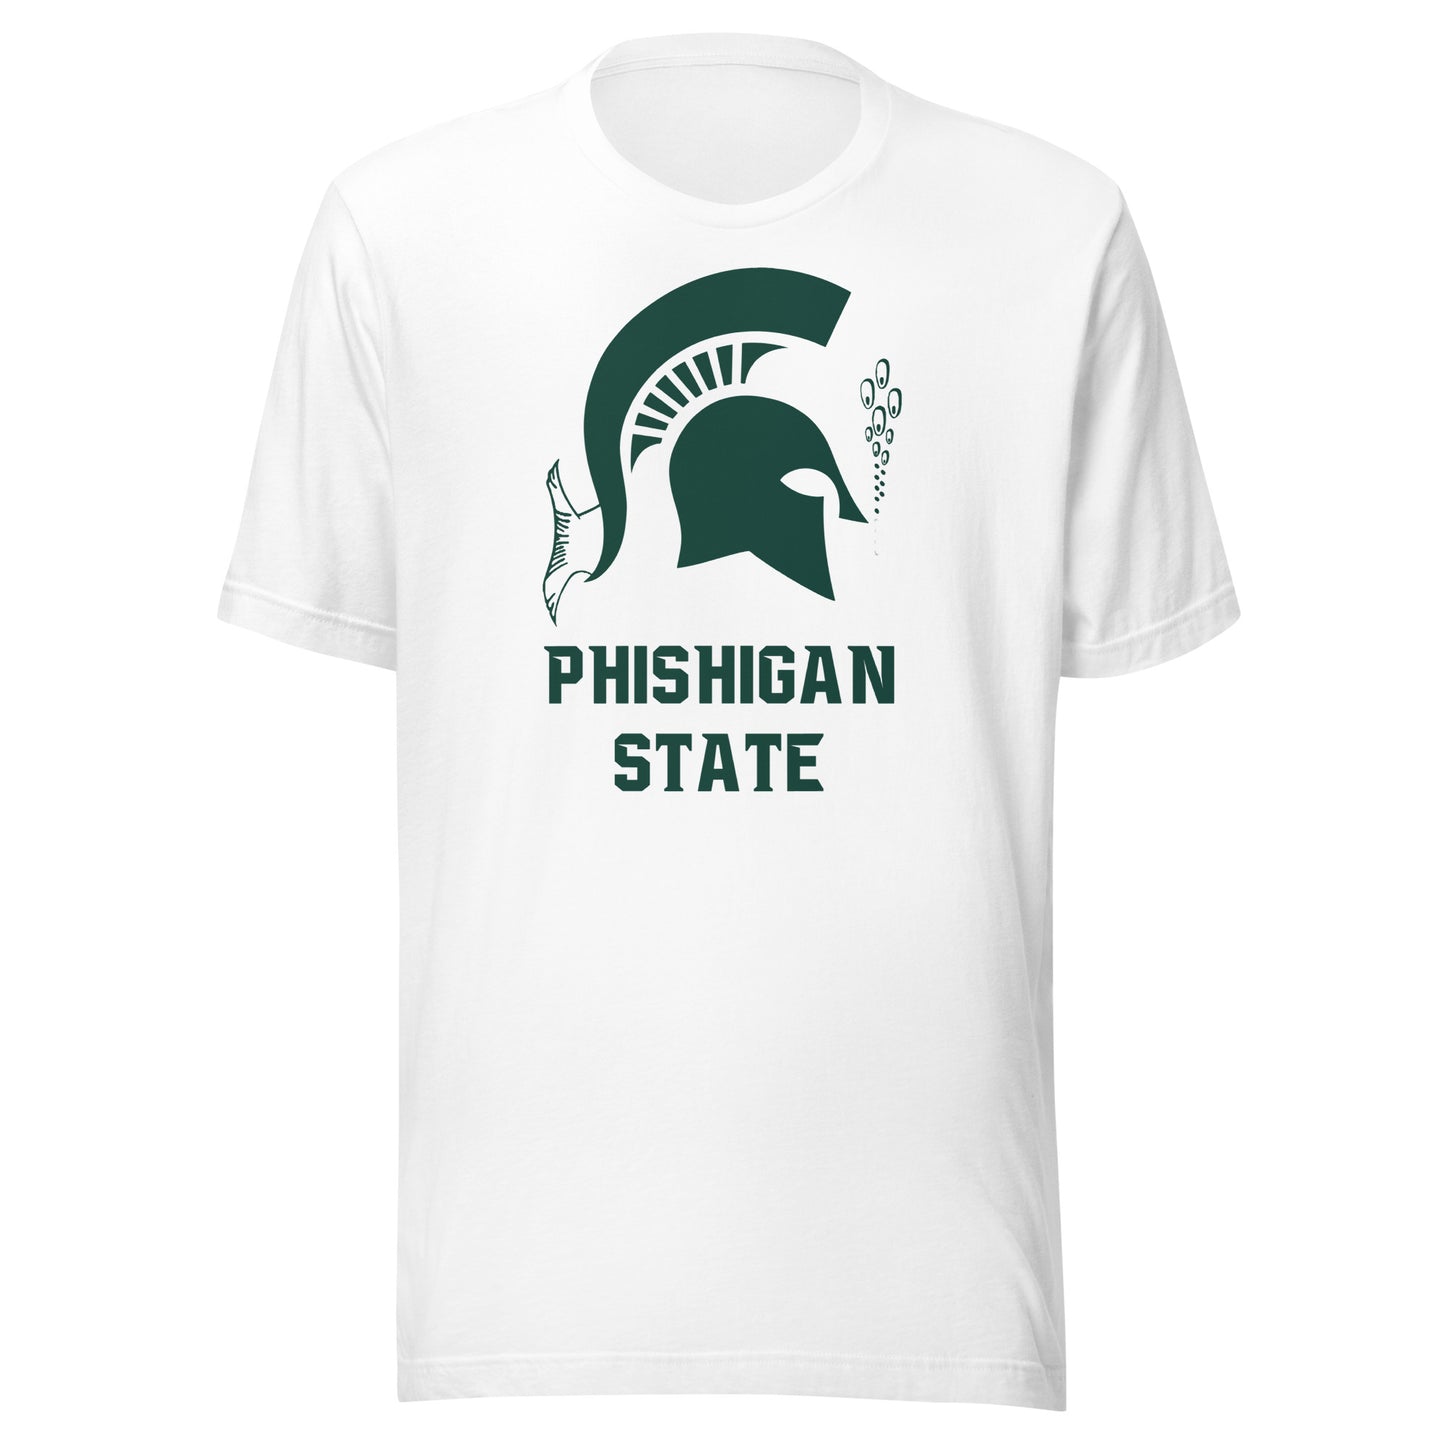 Phishigan State Unisex T-shirt